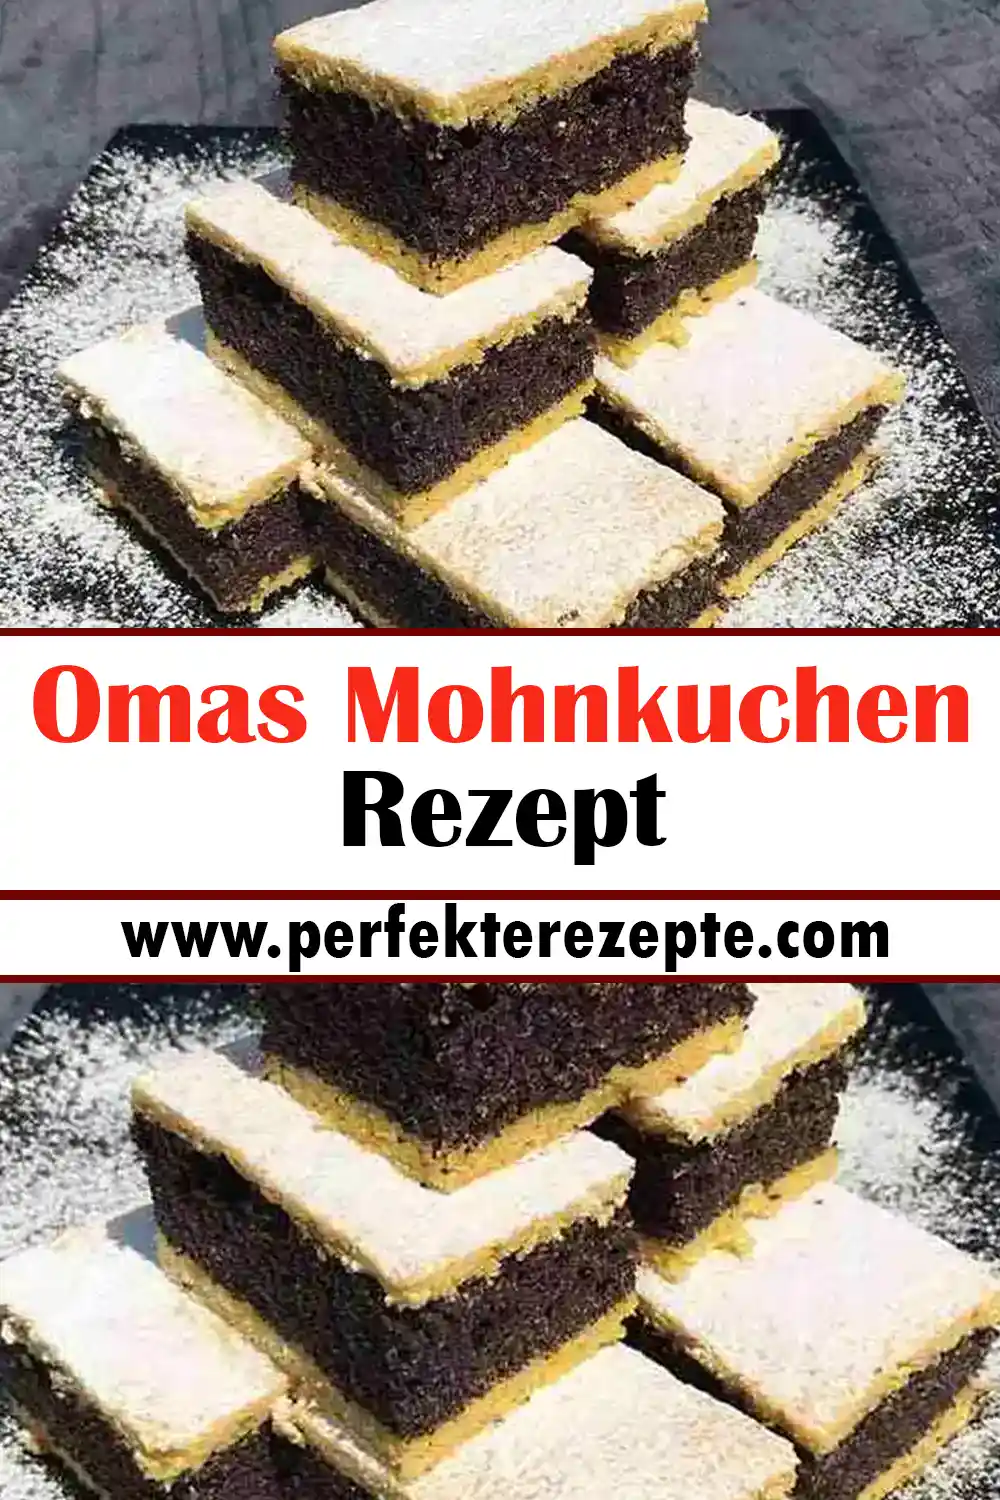 Omas Mohnkuchen Rezept